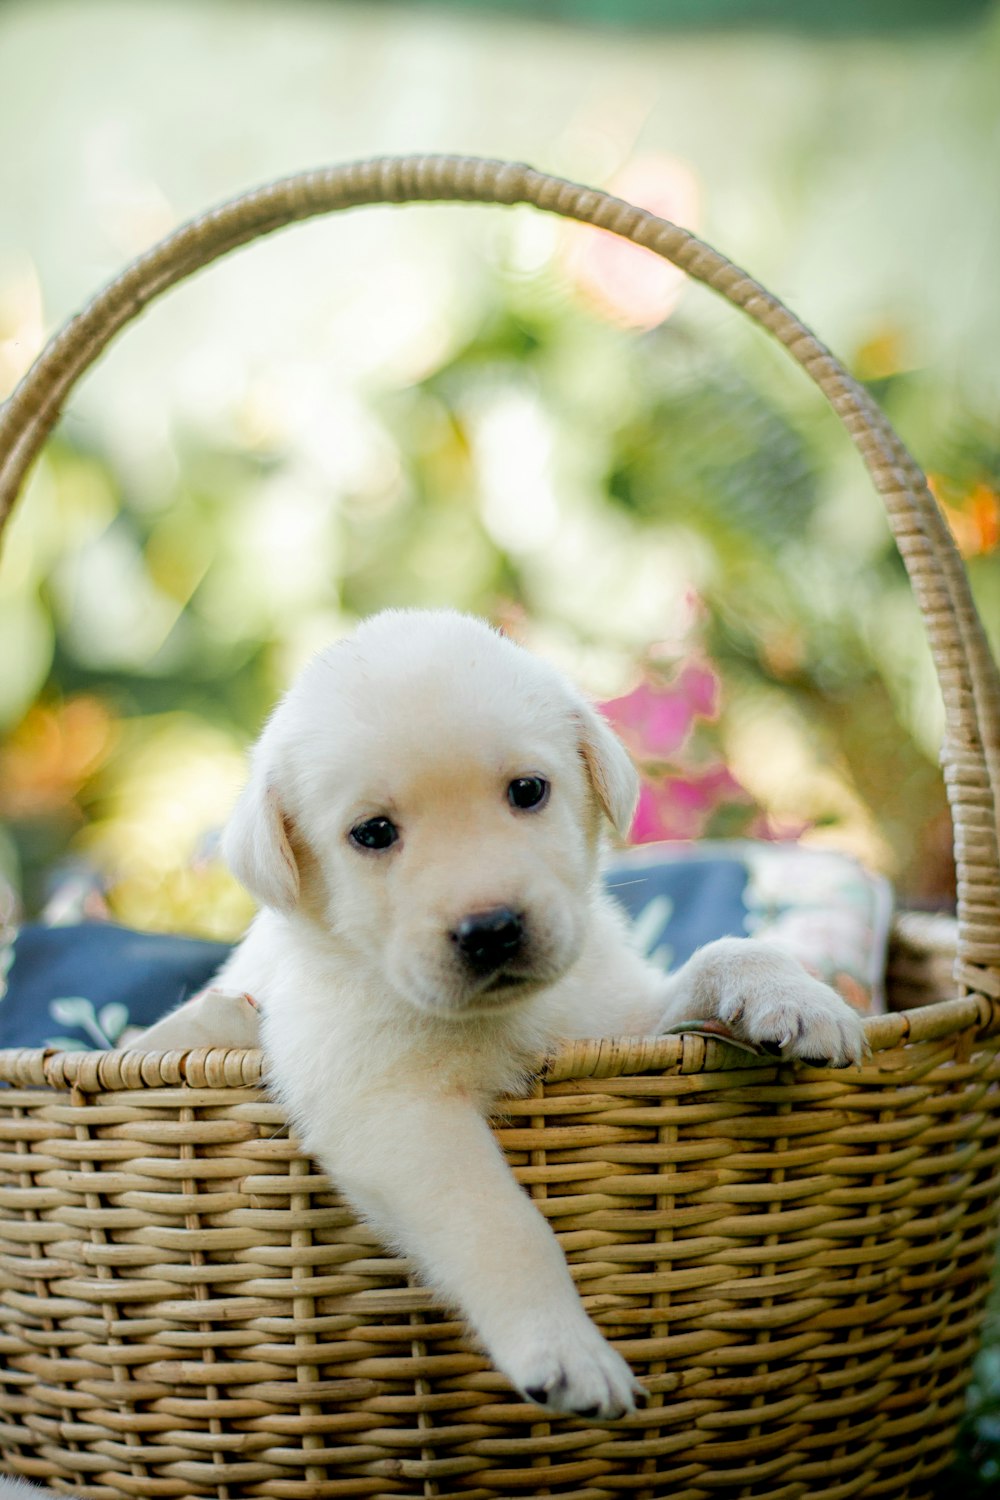 a white puppy sitting in a wicker basket